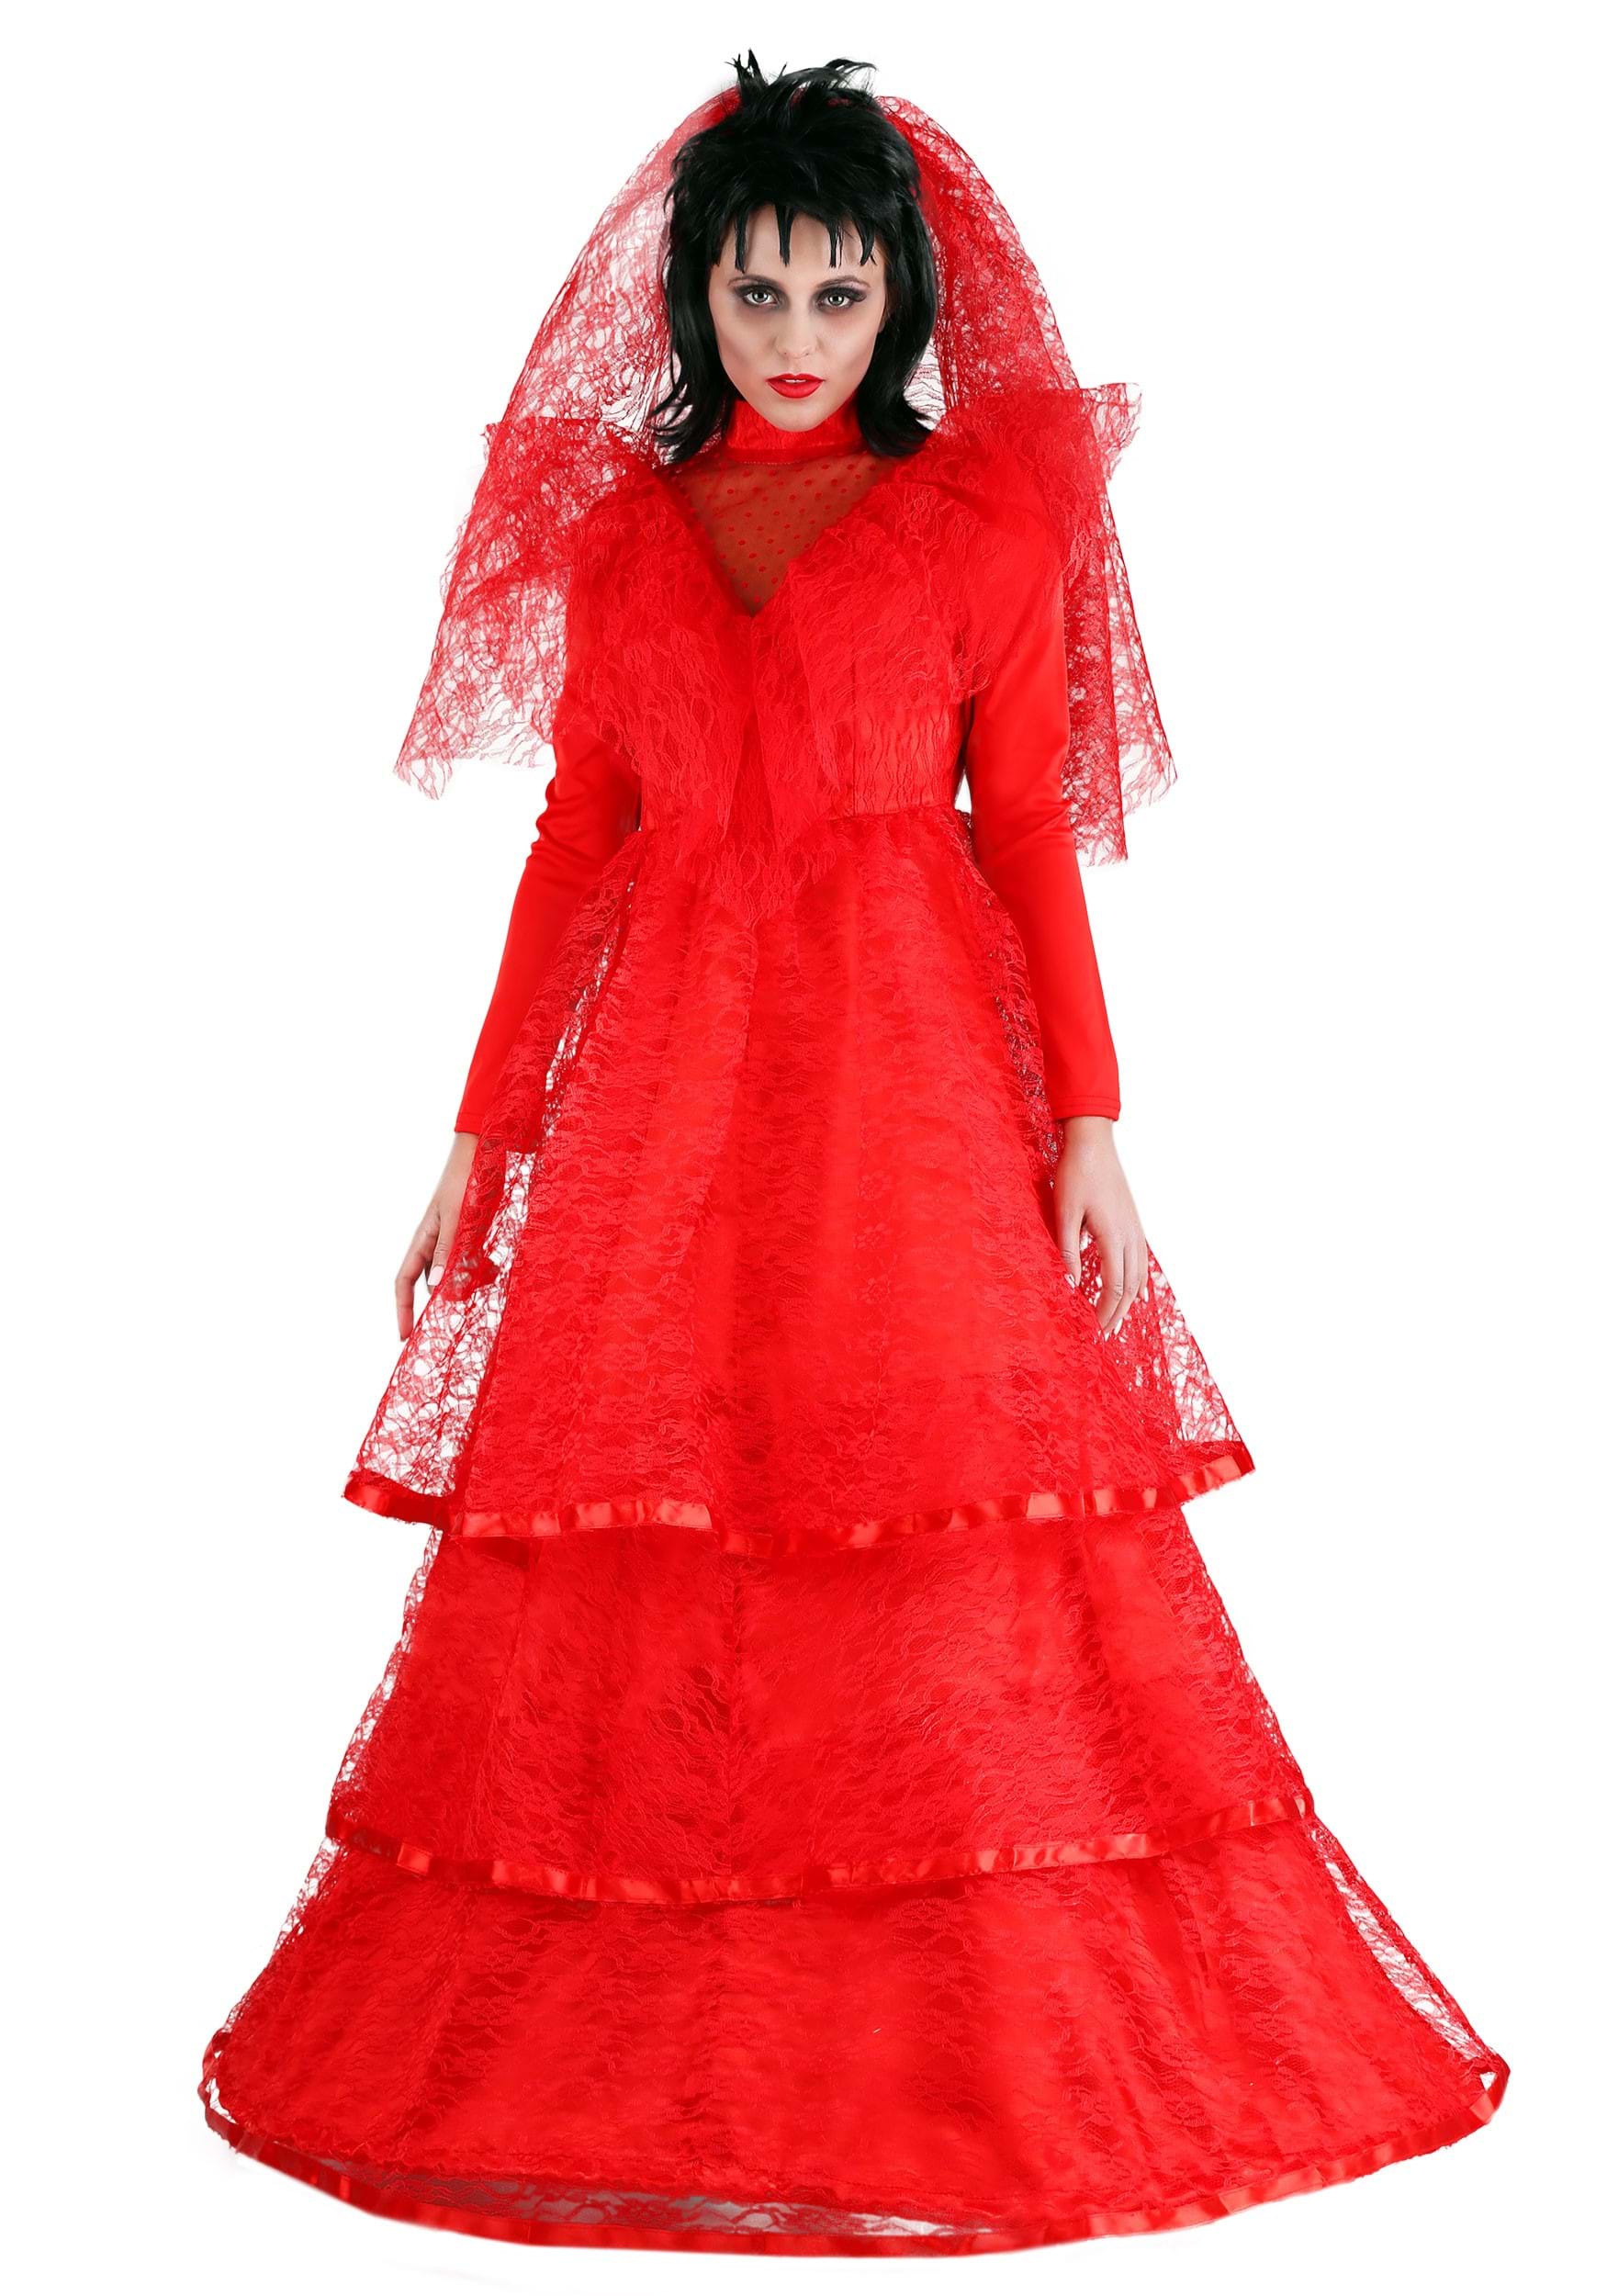 lydia red wedding dress